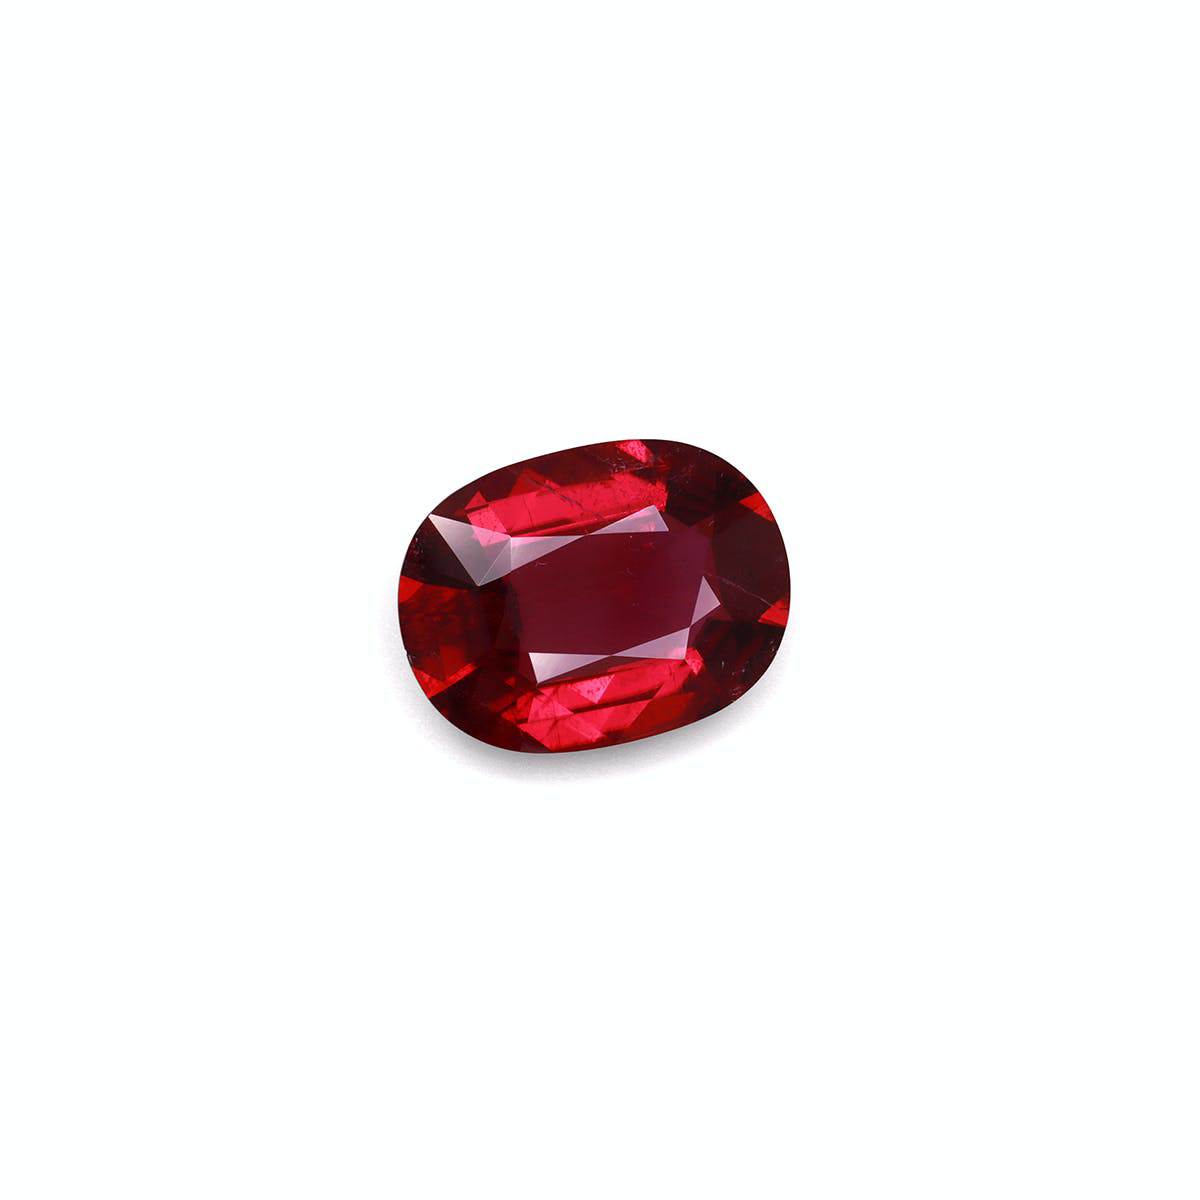 Picture of Vivid Red Rubellite Tourmaline 14.22ct (RL0934)